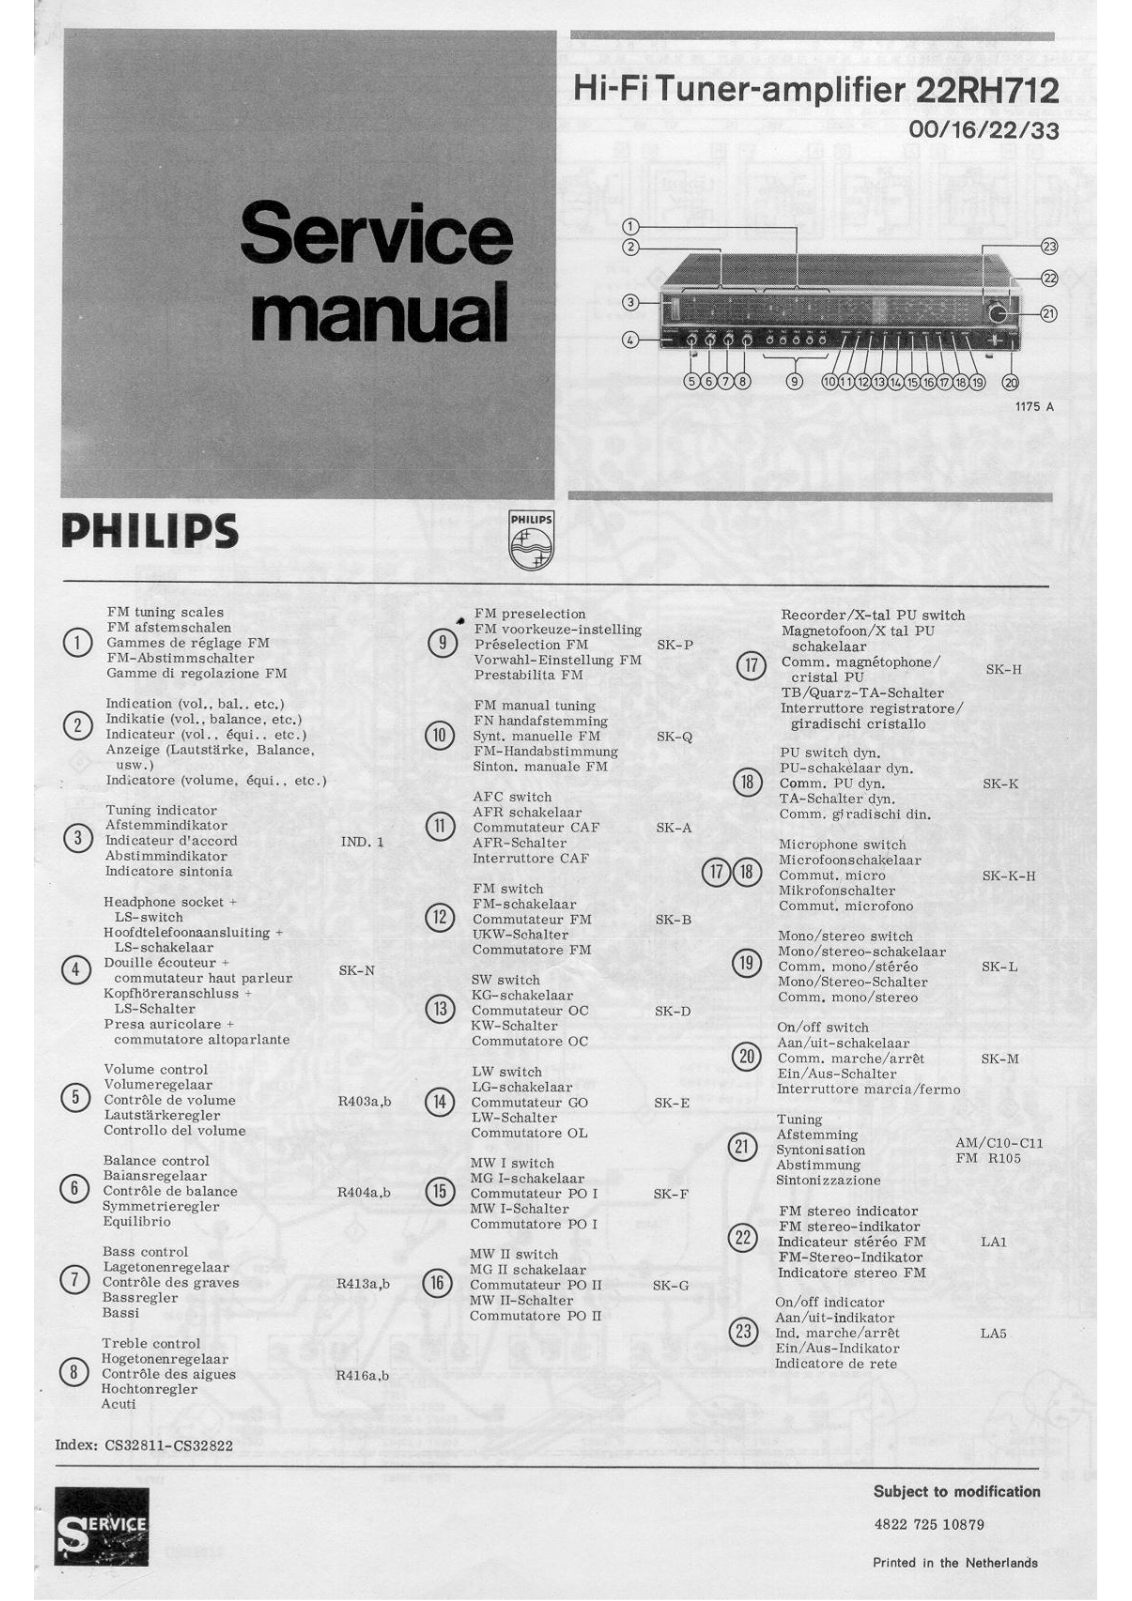 Philips 22-RH-712 Service Manual